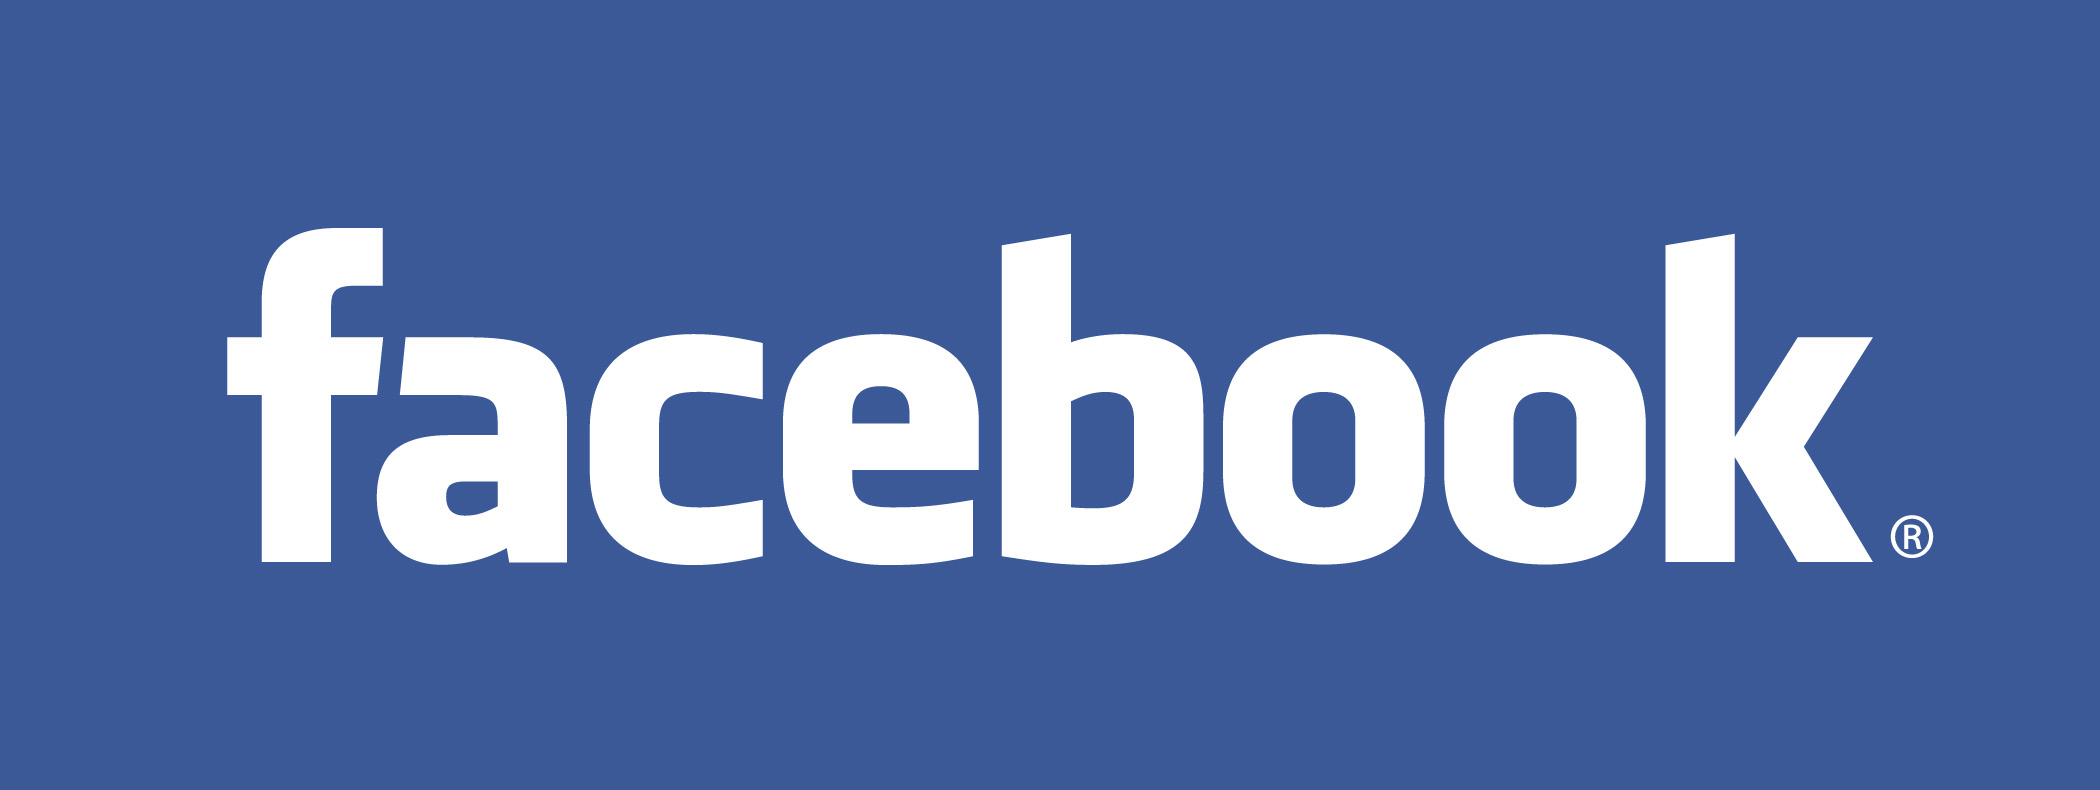 Facebook announces new metrics updates and launces a new inbox app